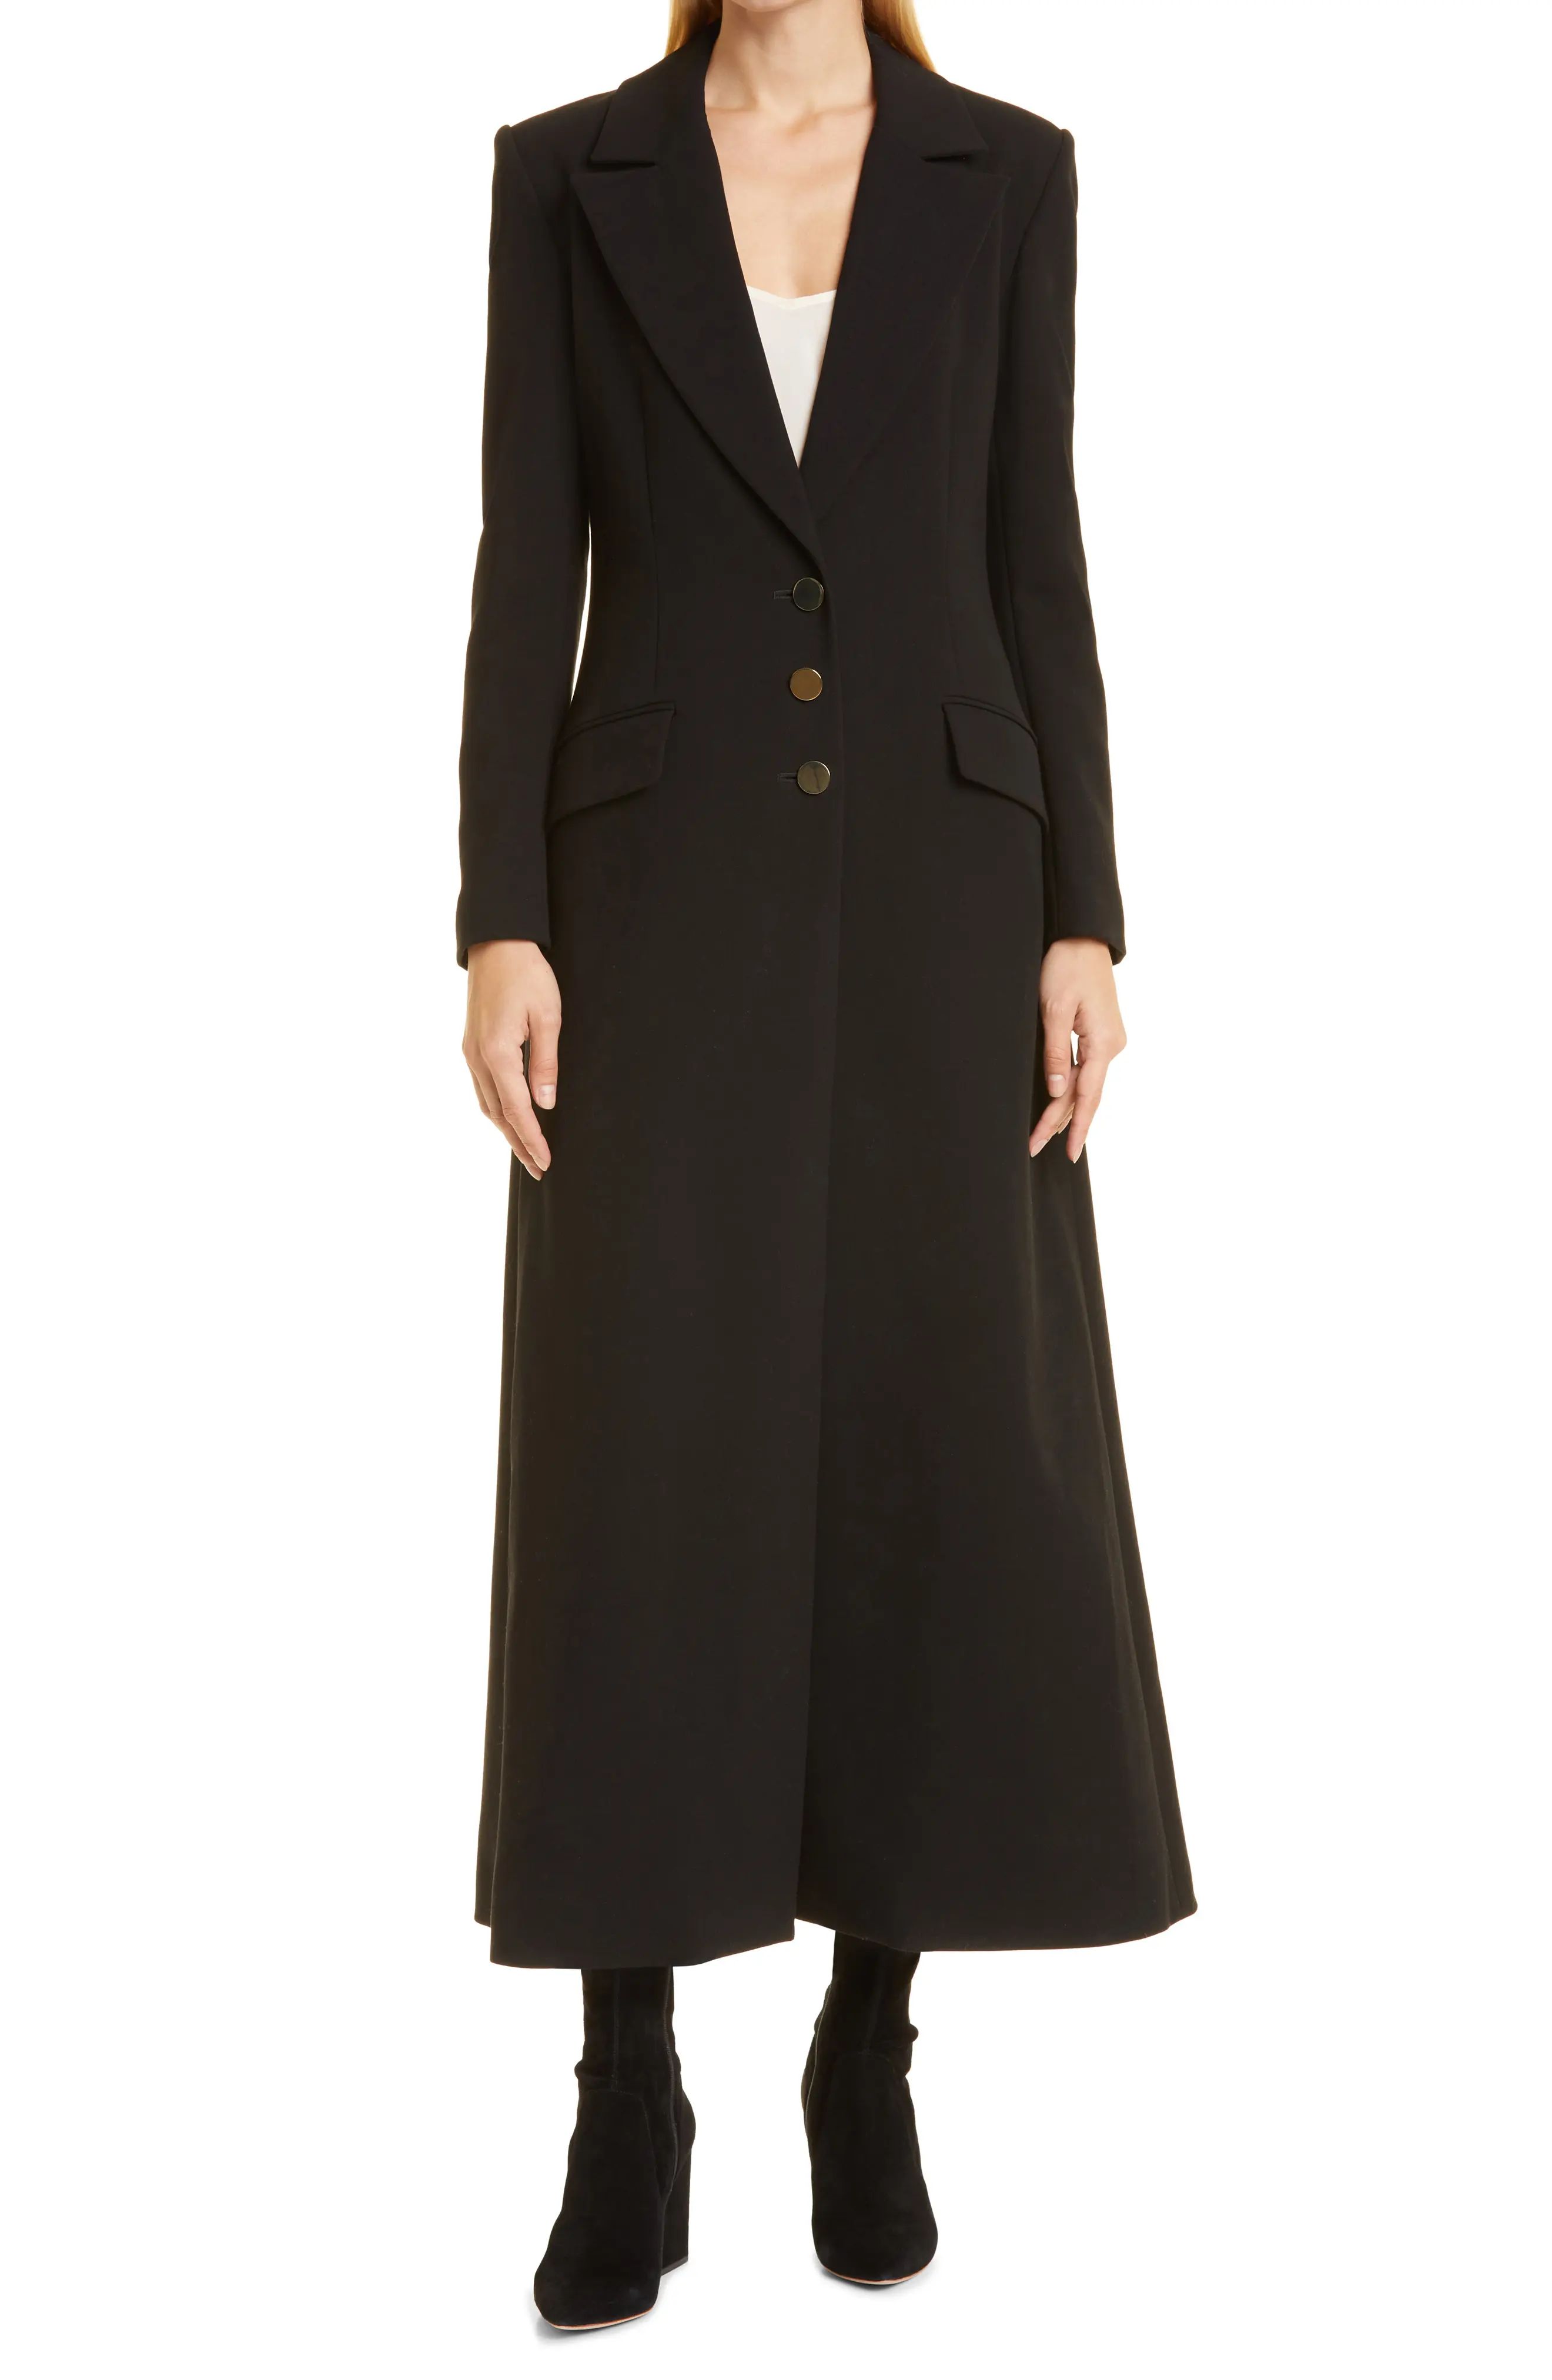 Alice + Olivia Theo Long Coat, Size Small in Black at Nordstrom | Nordstrom